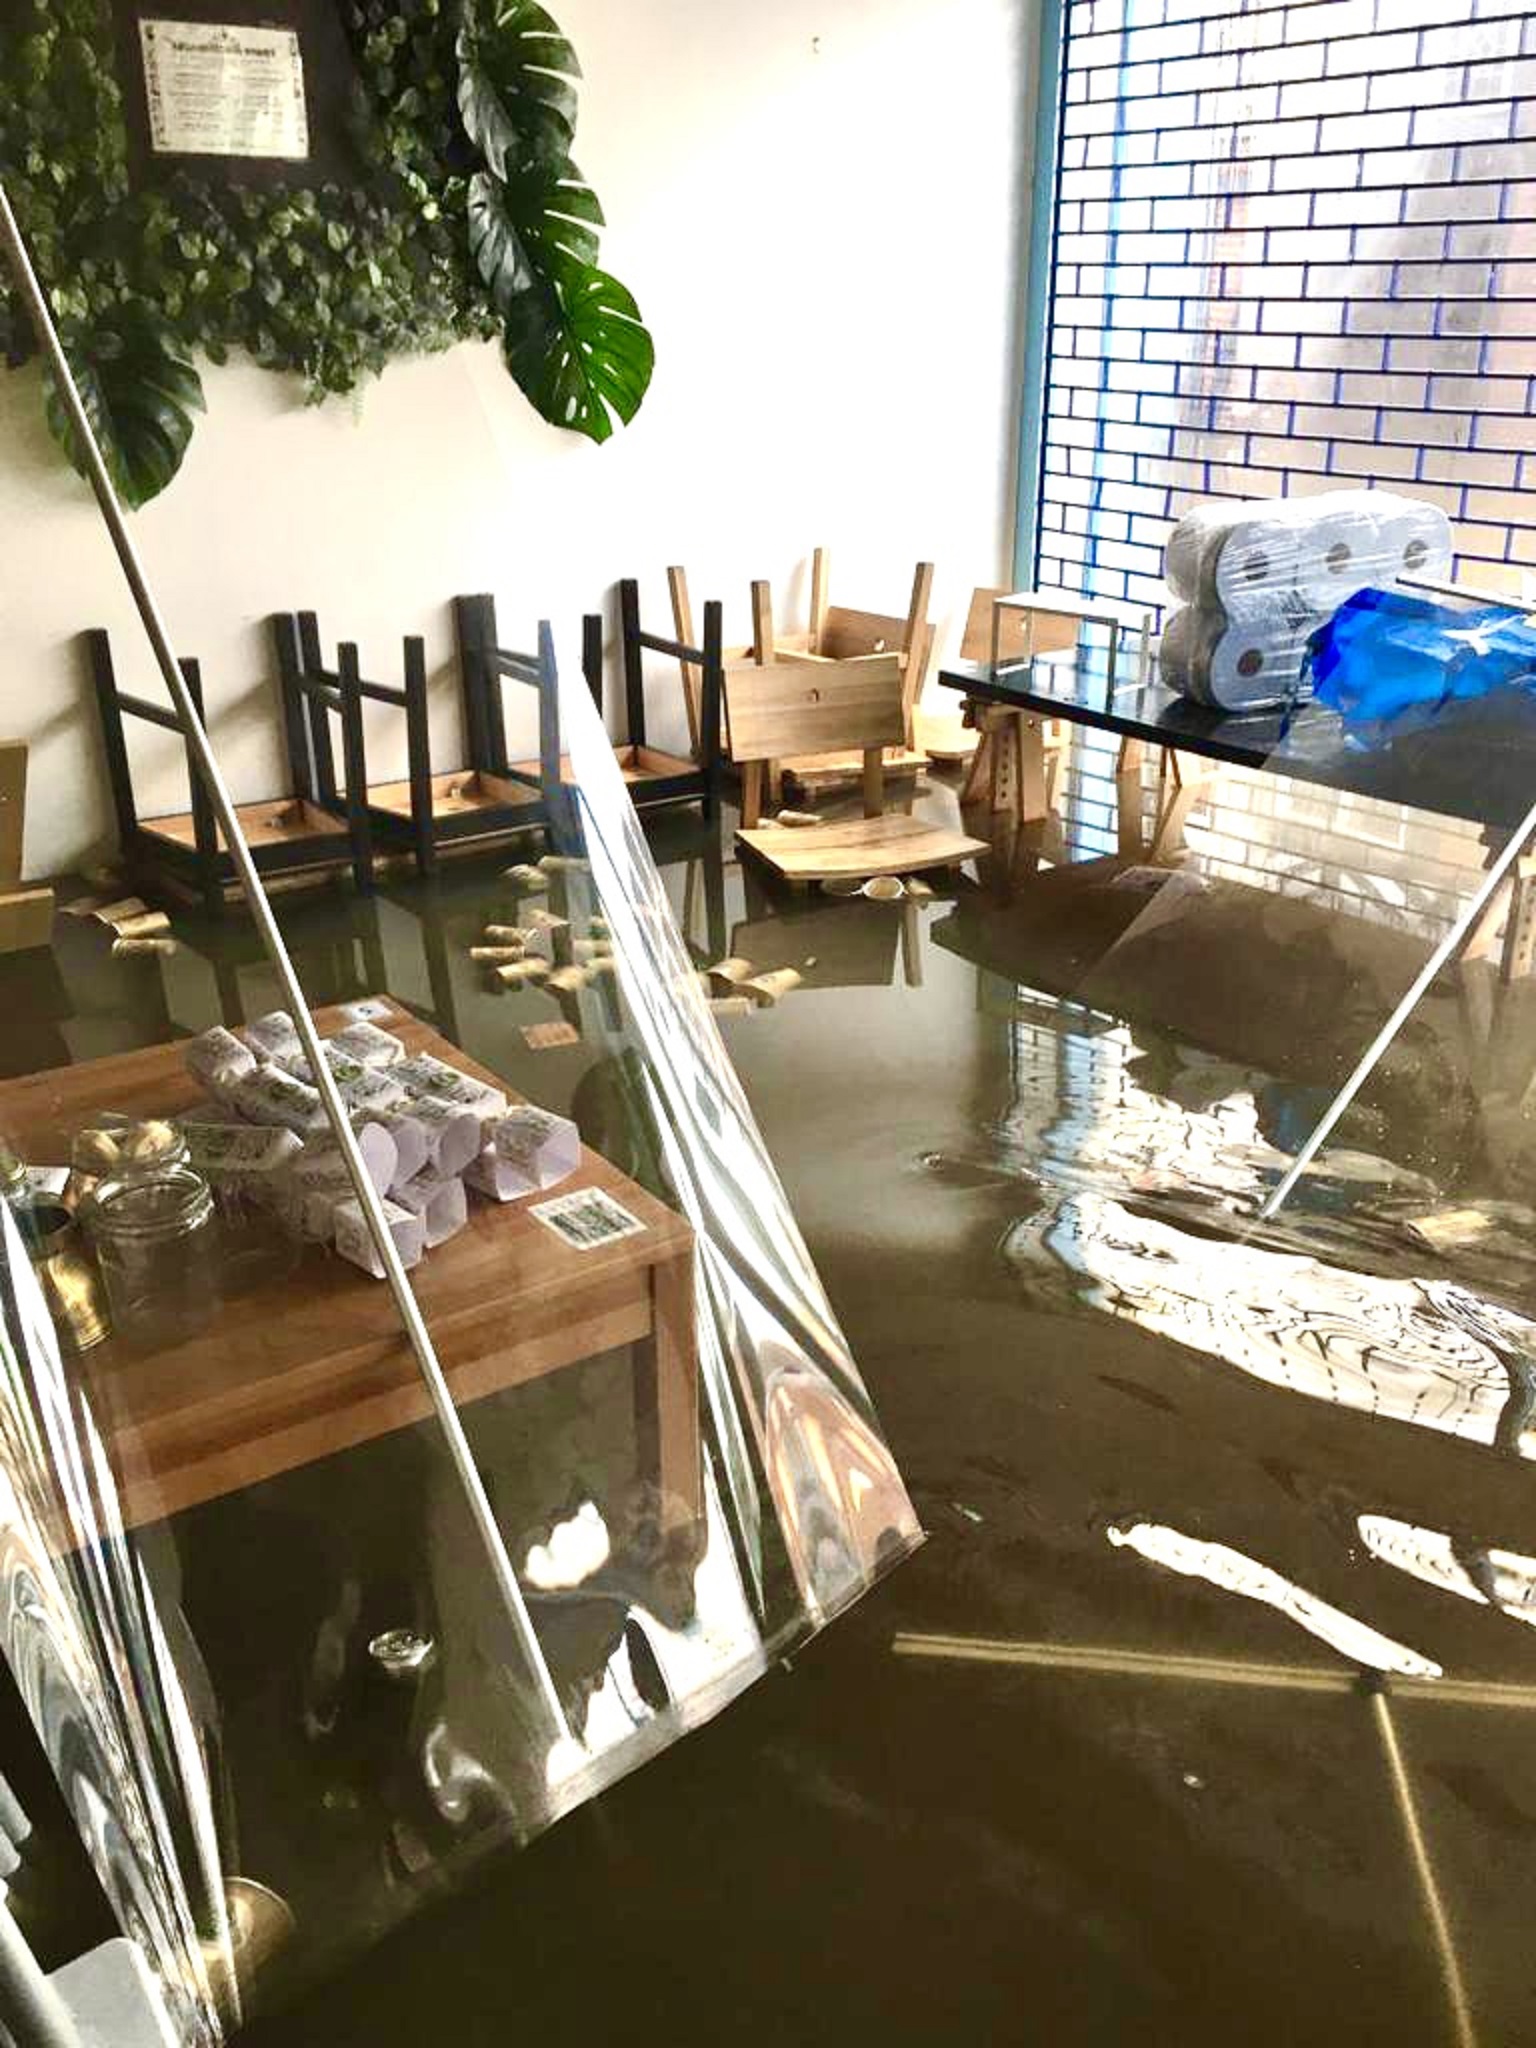 Northwich Coffee Shop Abda's was hit by flooding